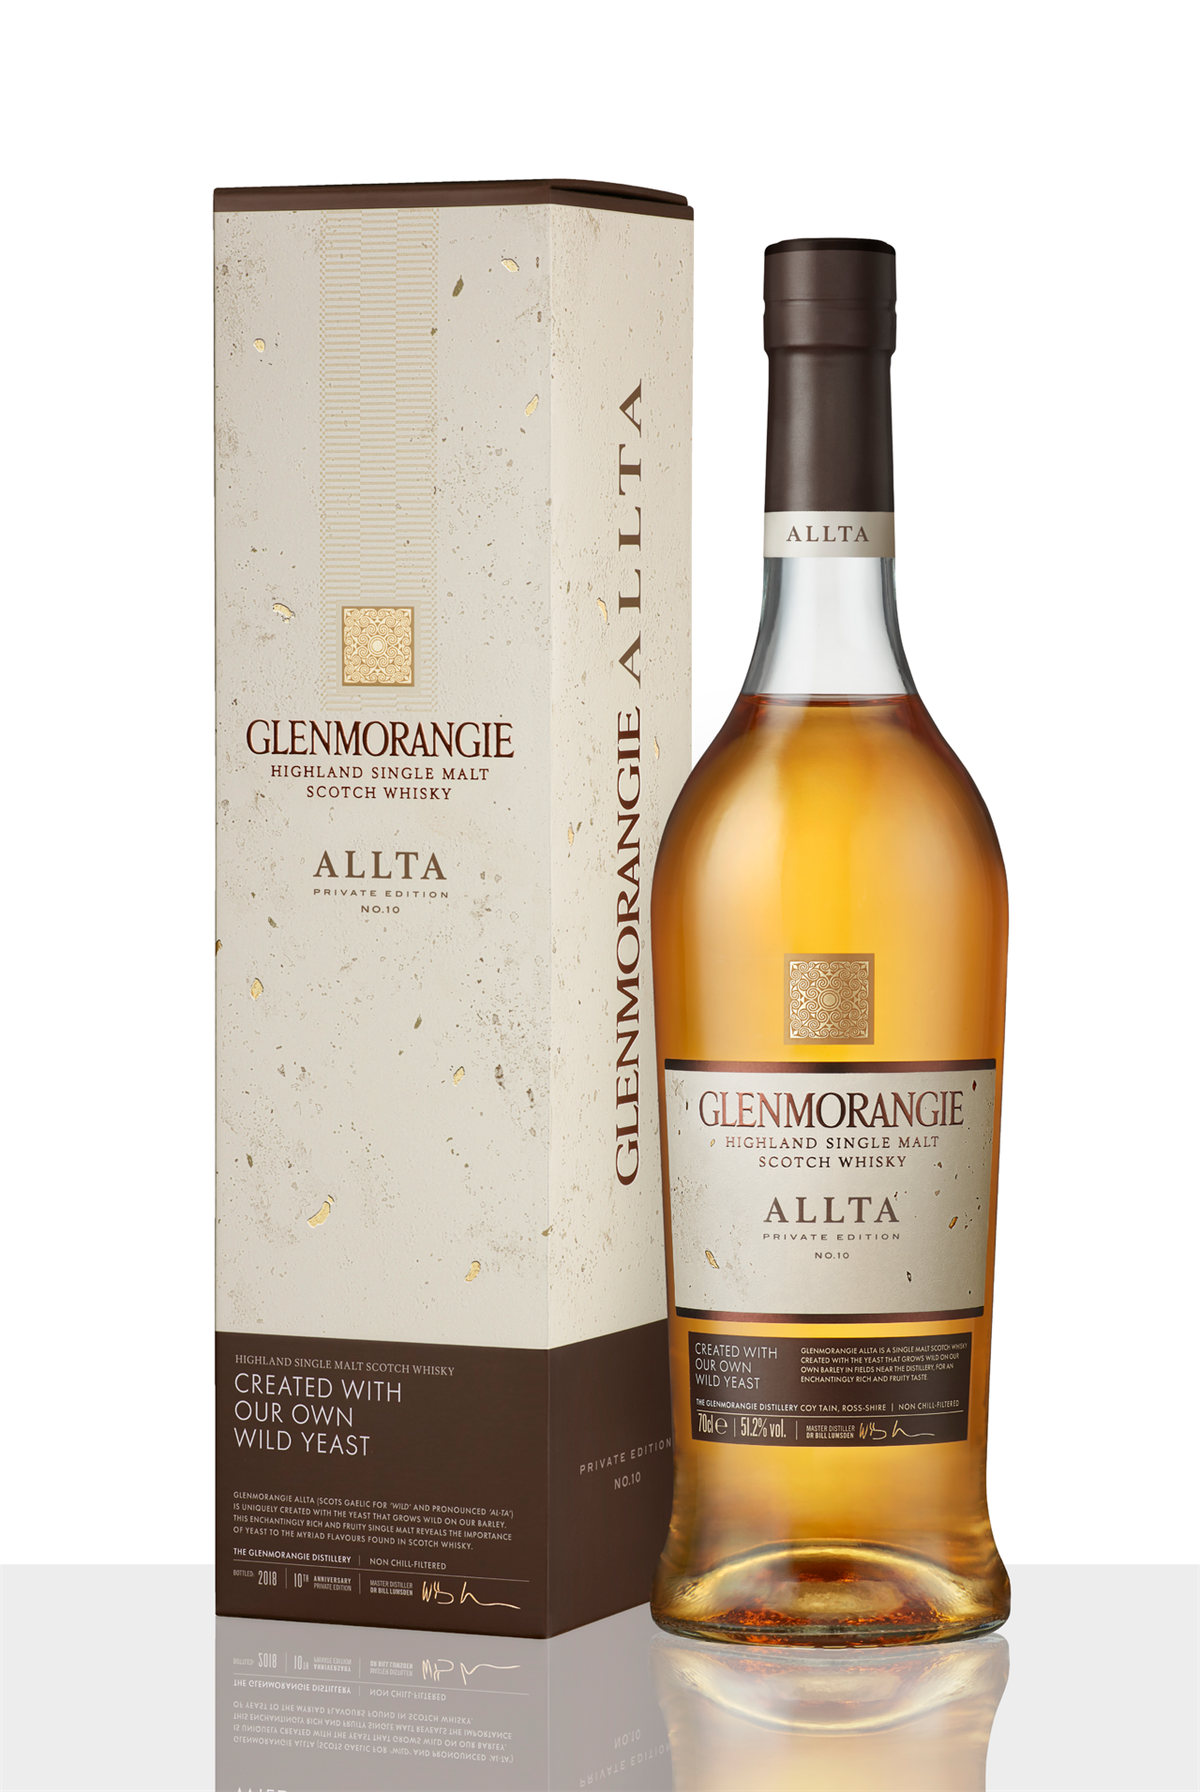 Glenmorangie Private Edition 10 Allta_Bottle with Carton on White Background